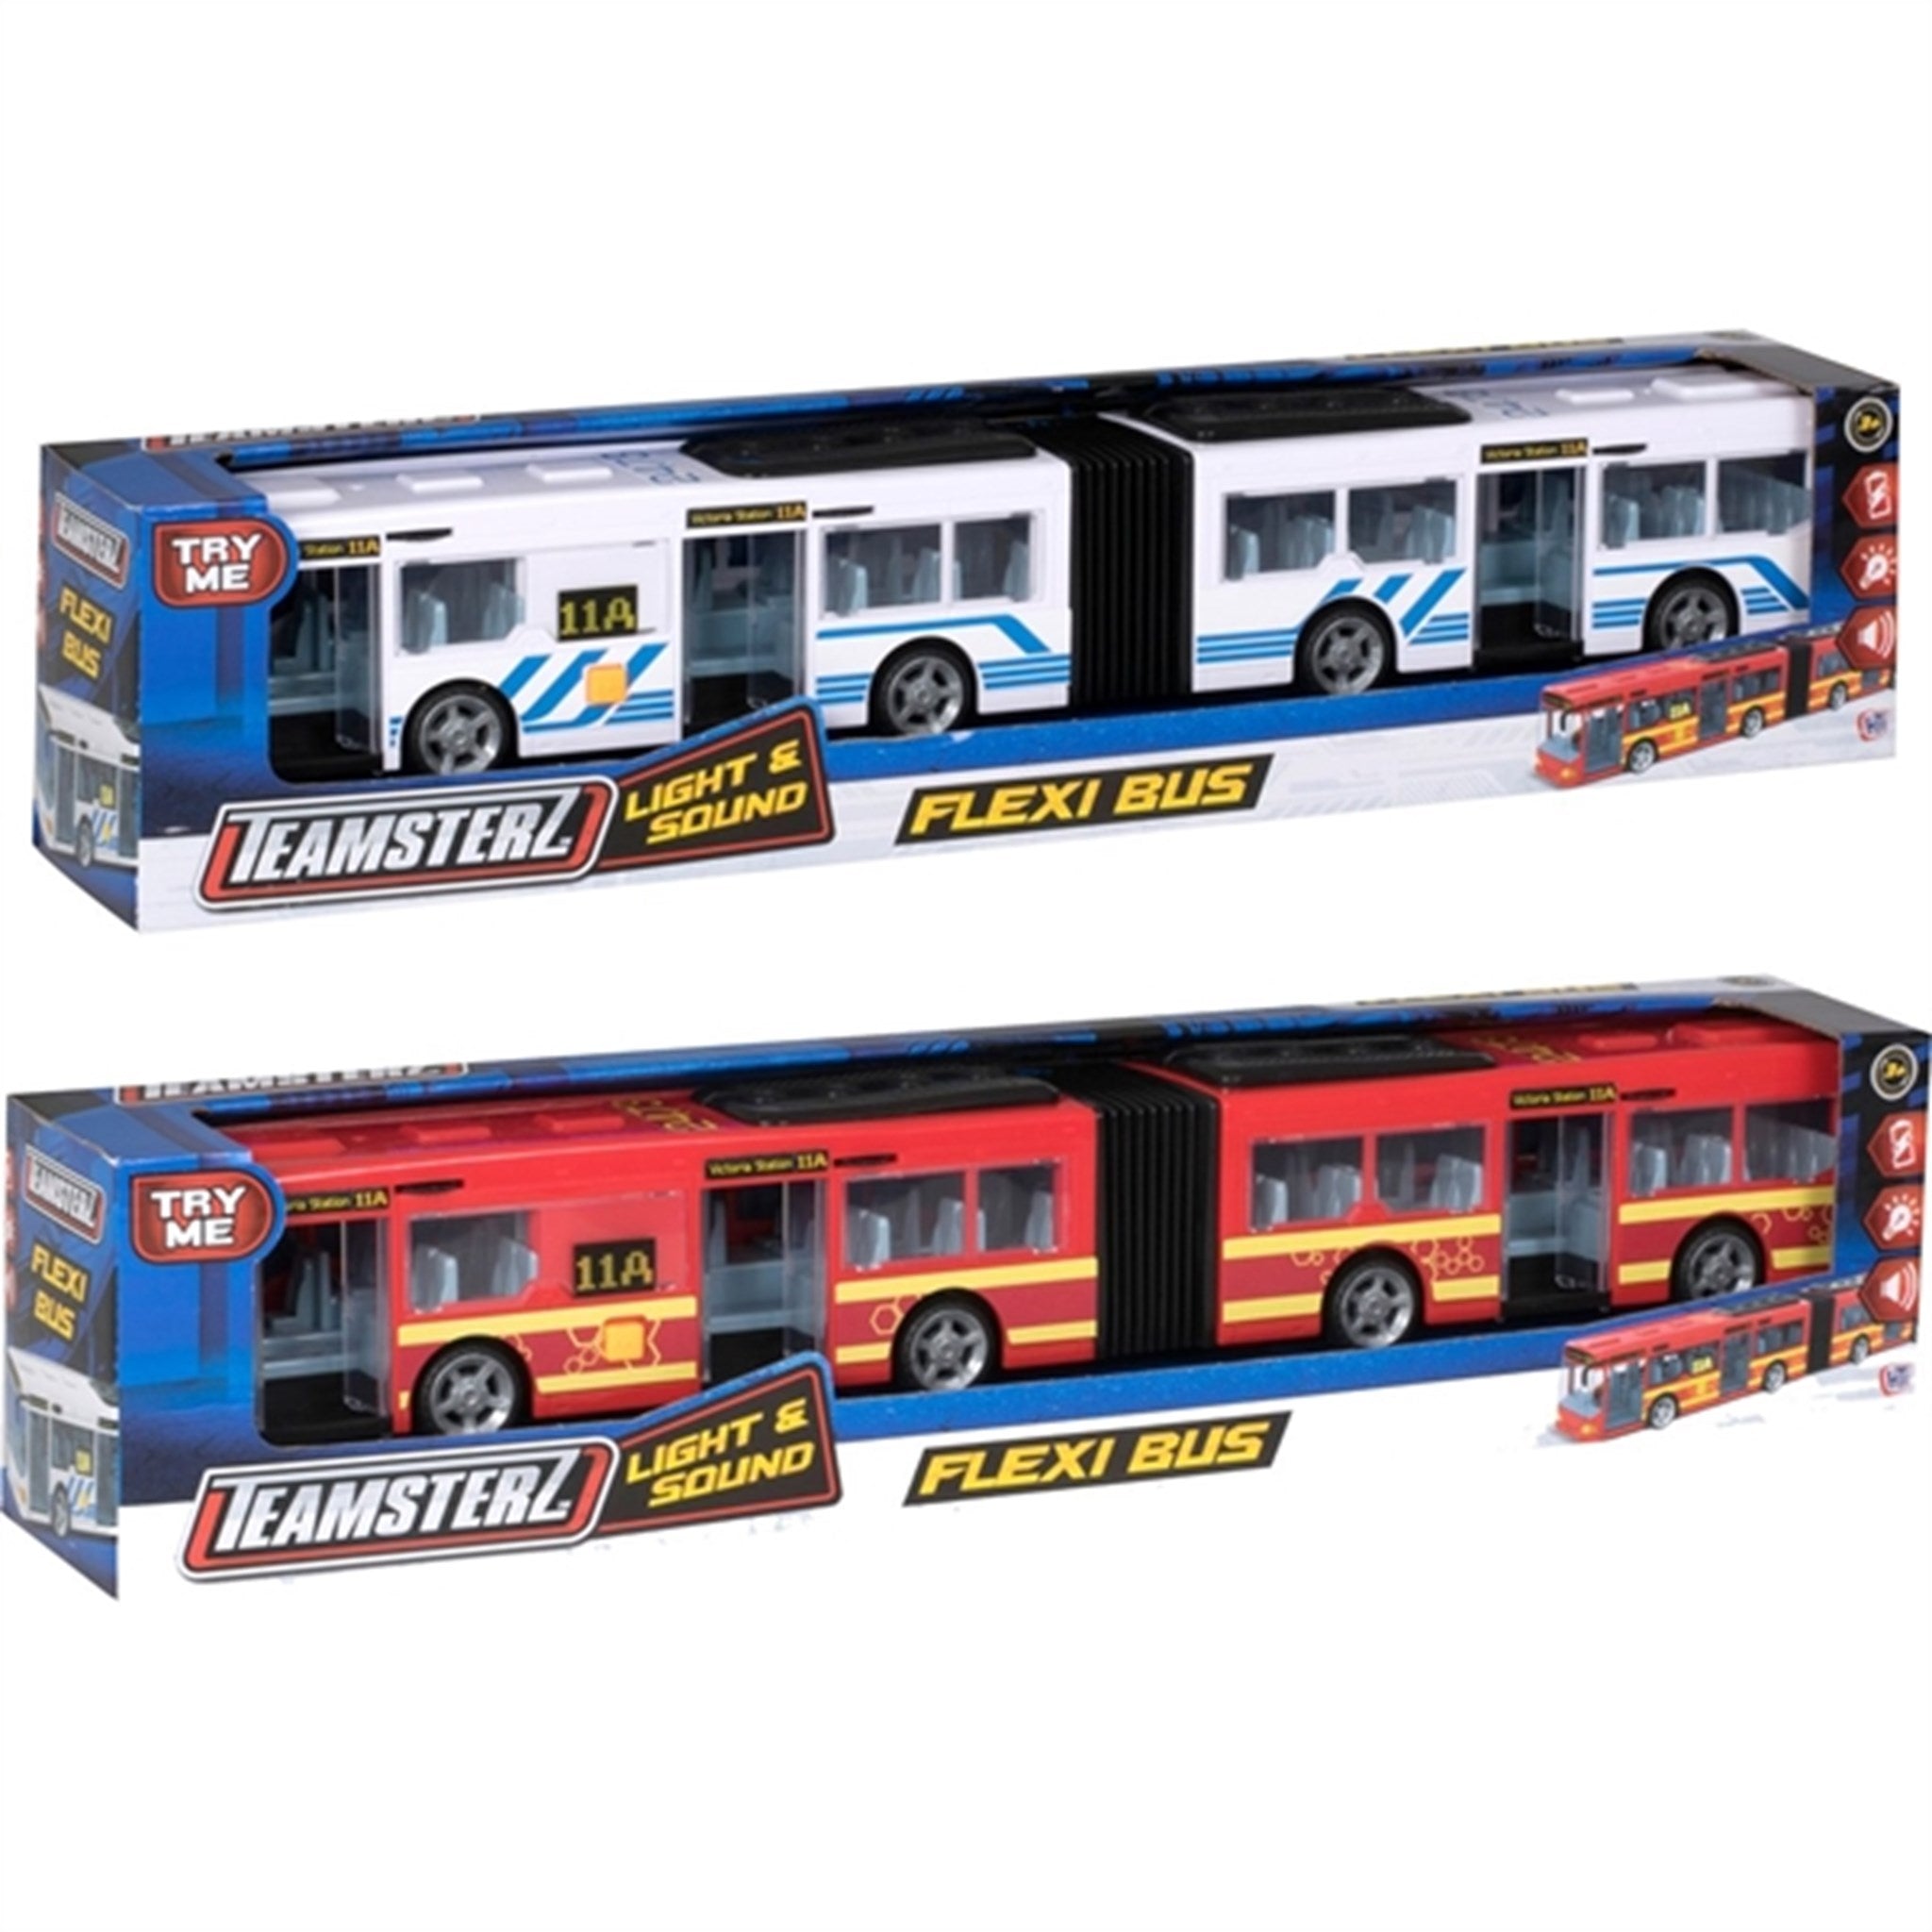 Teamsterz L&S Flexi Bus White/Blue 2